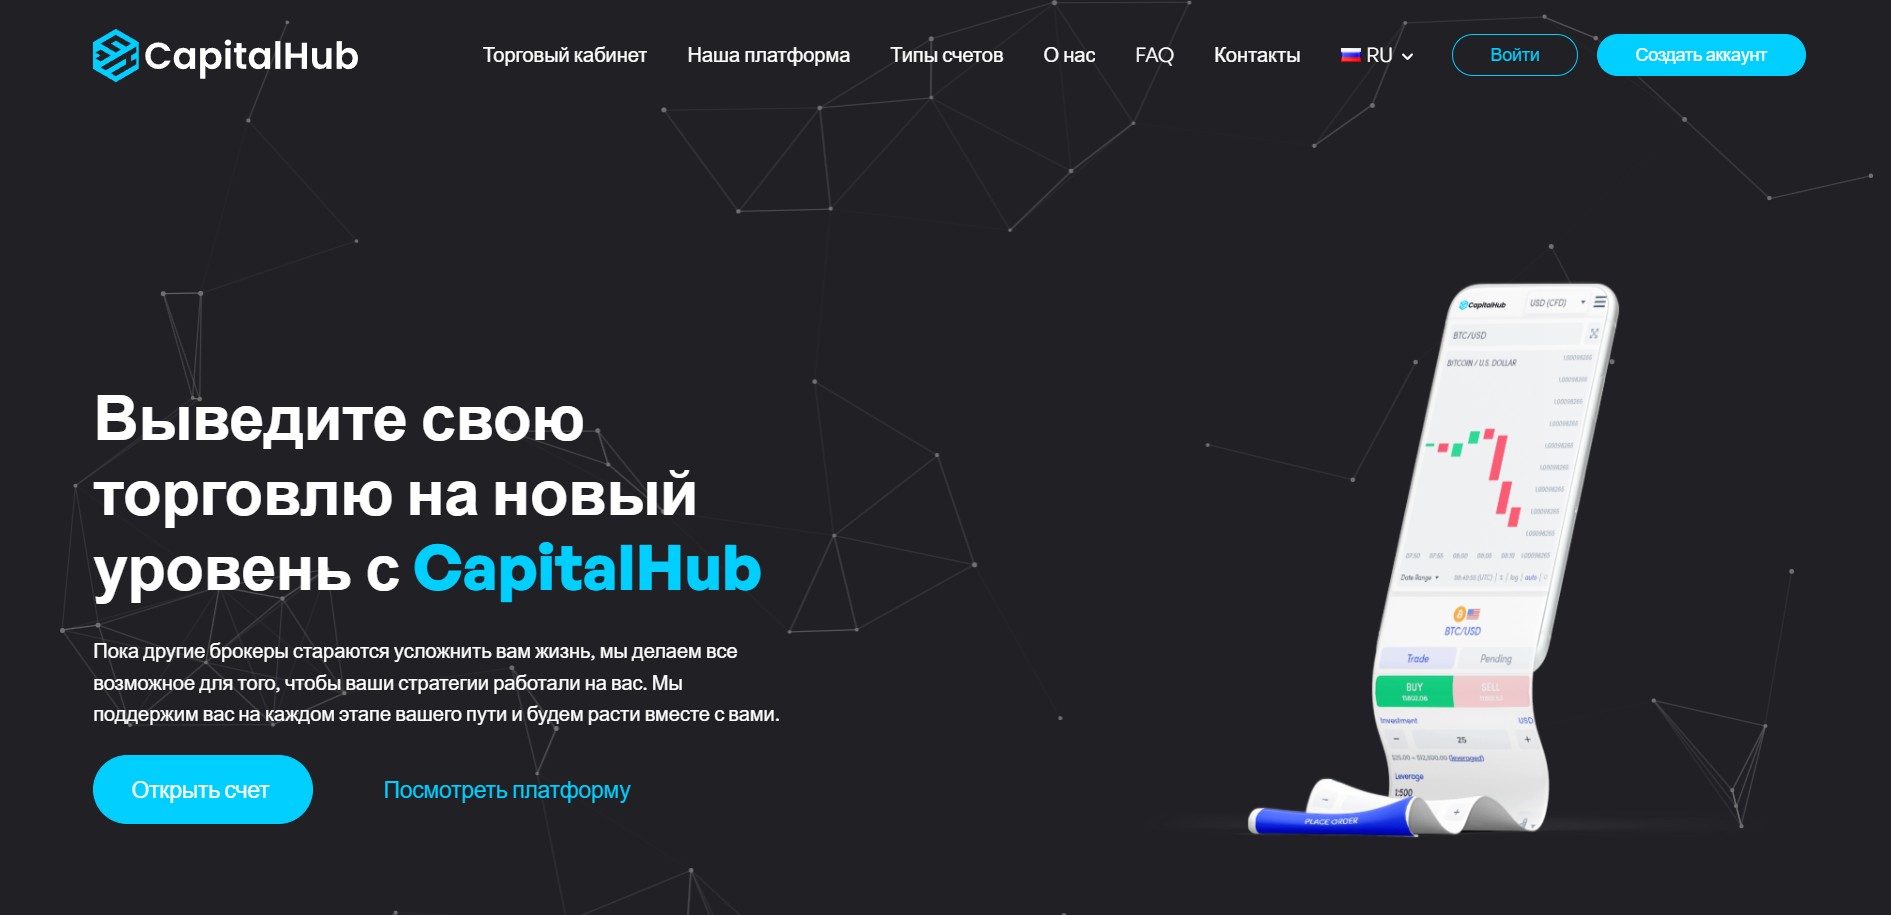 Capital hub обзор сайта